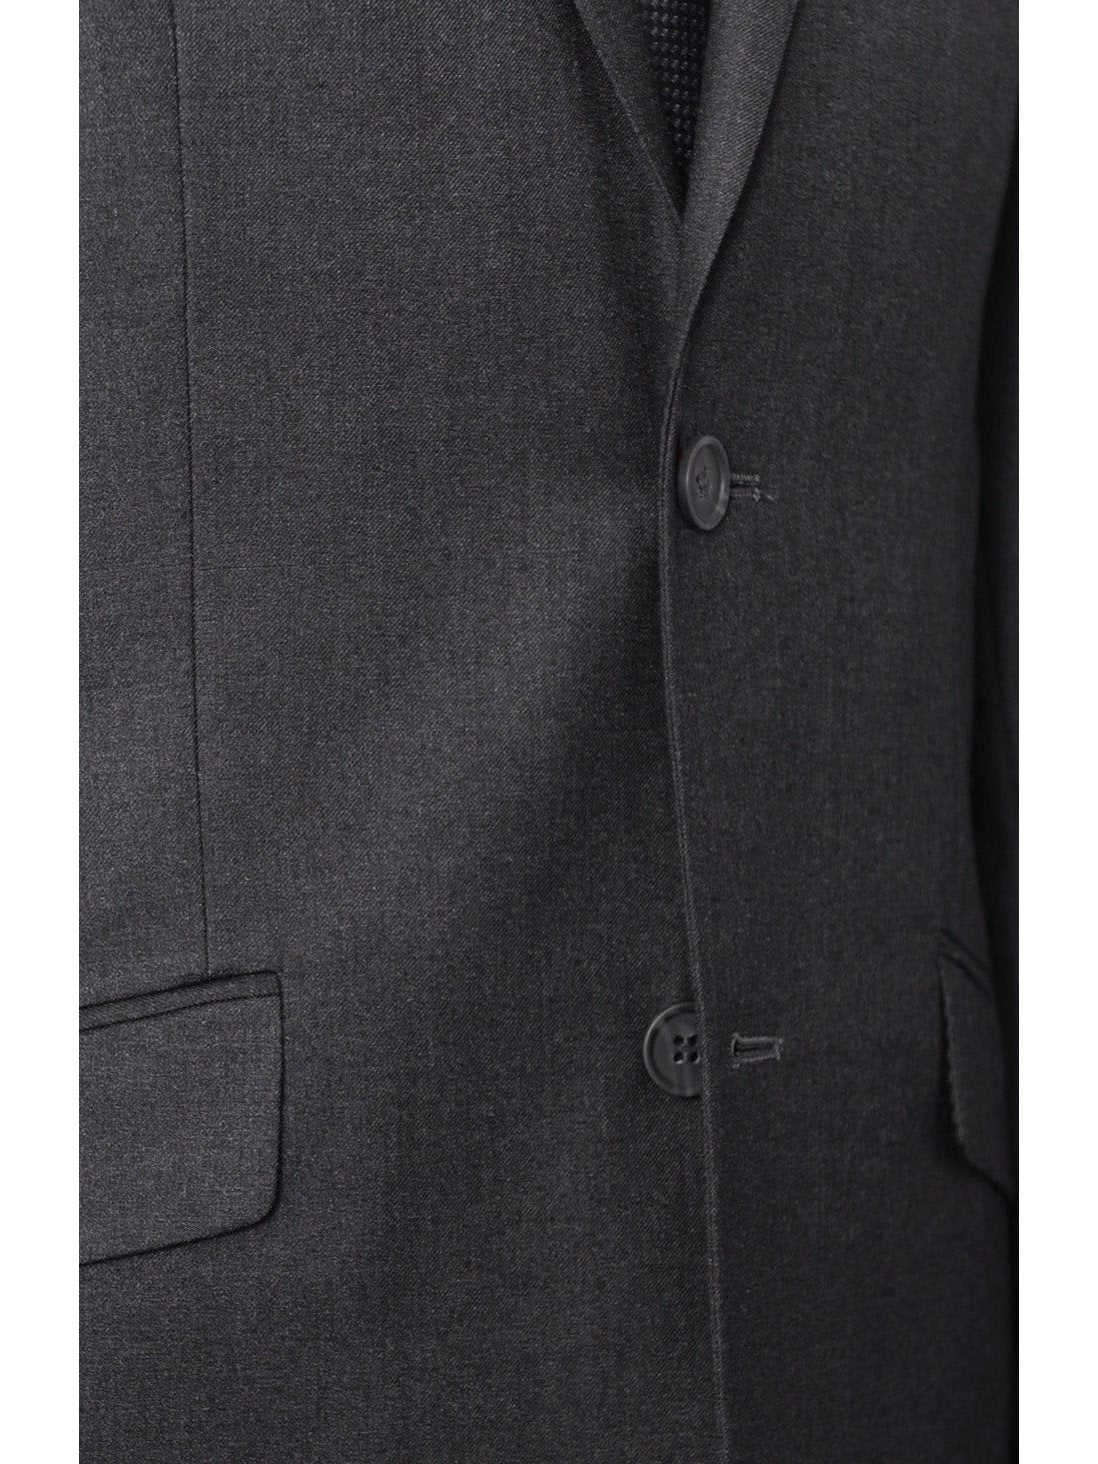 Raphael BLAZERS Raphael Slim Fit Solid Charcoal Gray Two Button Blazer Suit Jacket